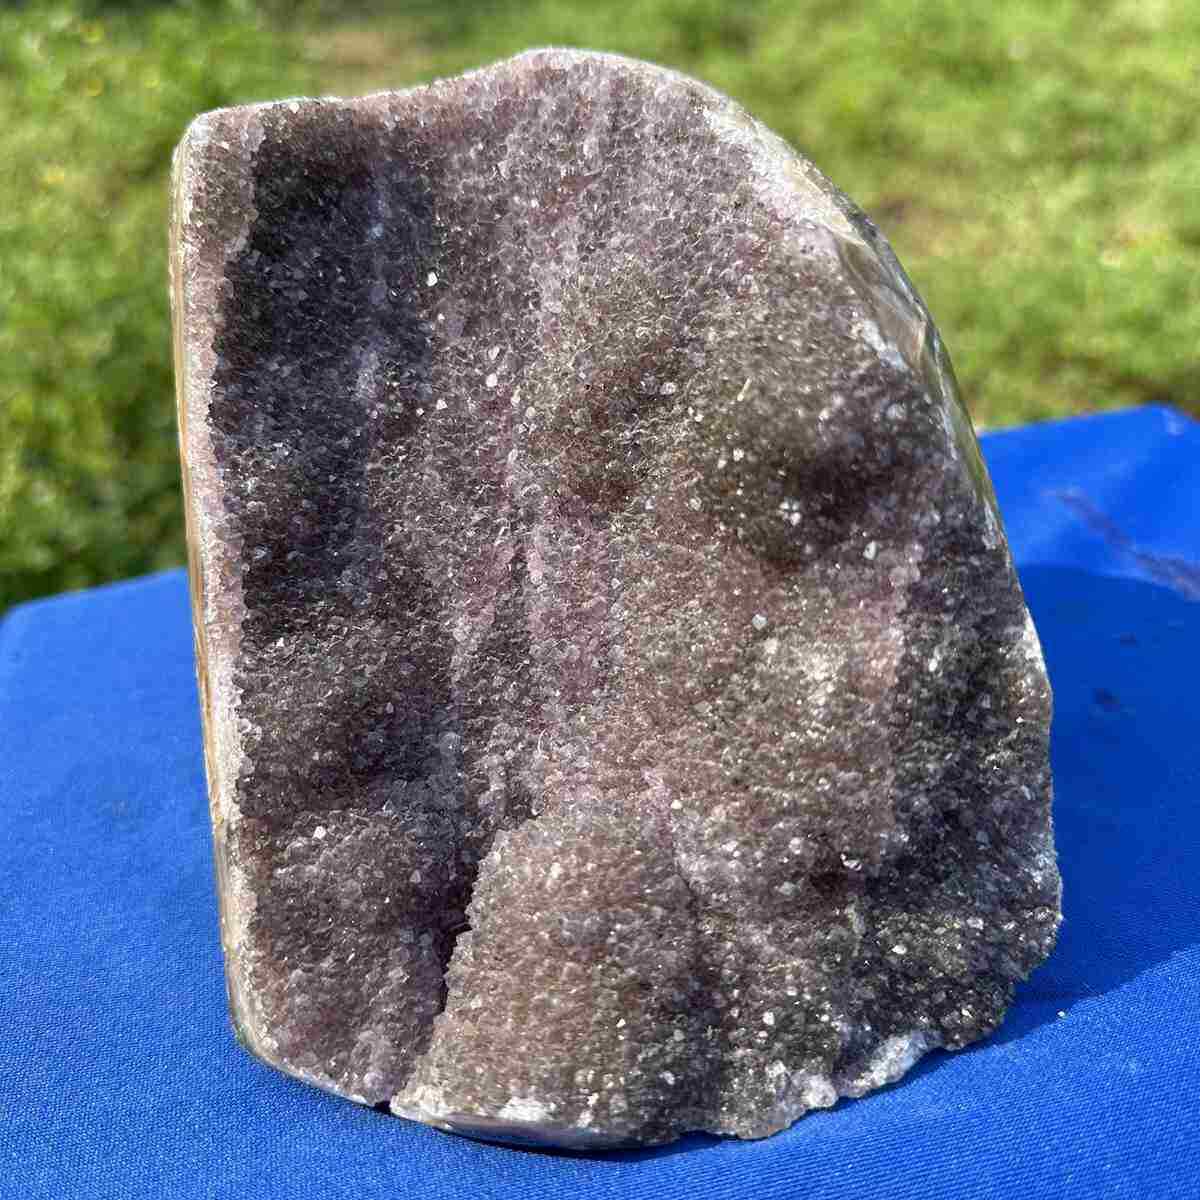 1905gNatural Amethyst Geode Mineral Specimen Crystal Quartz Energy healing Decor